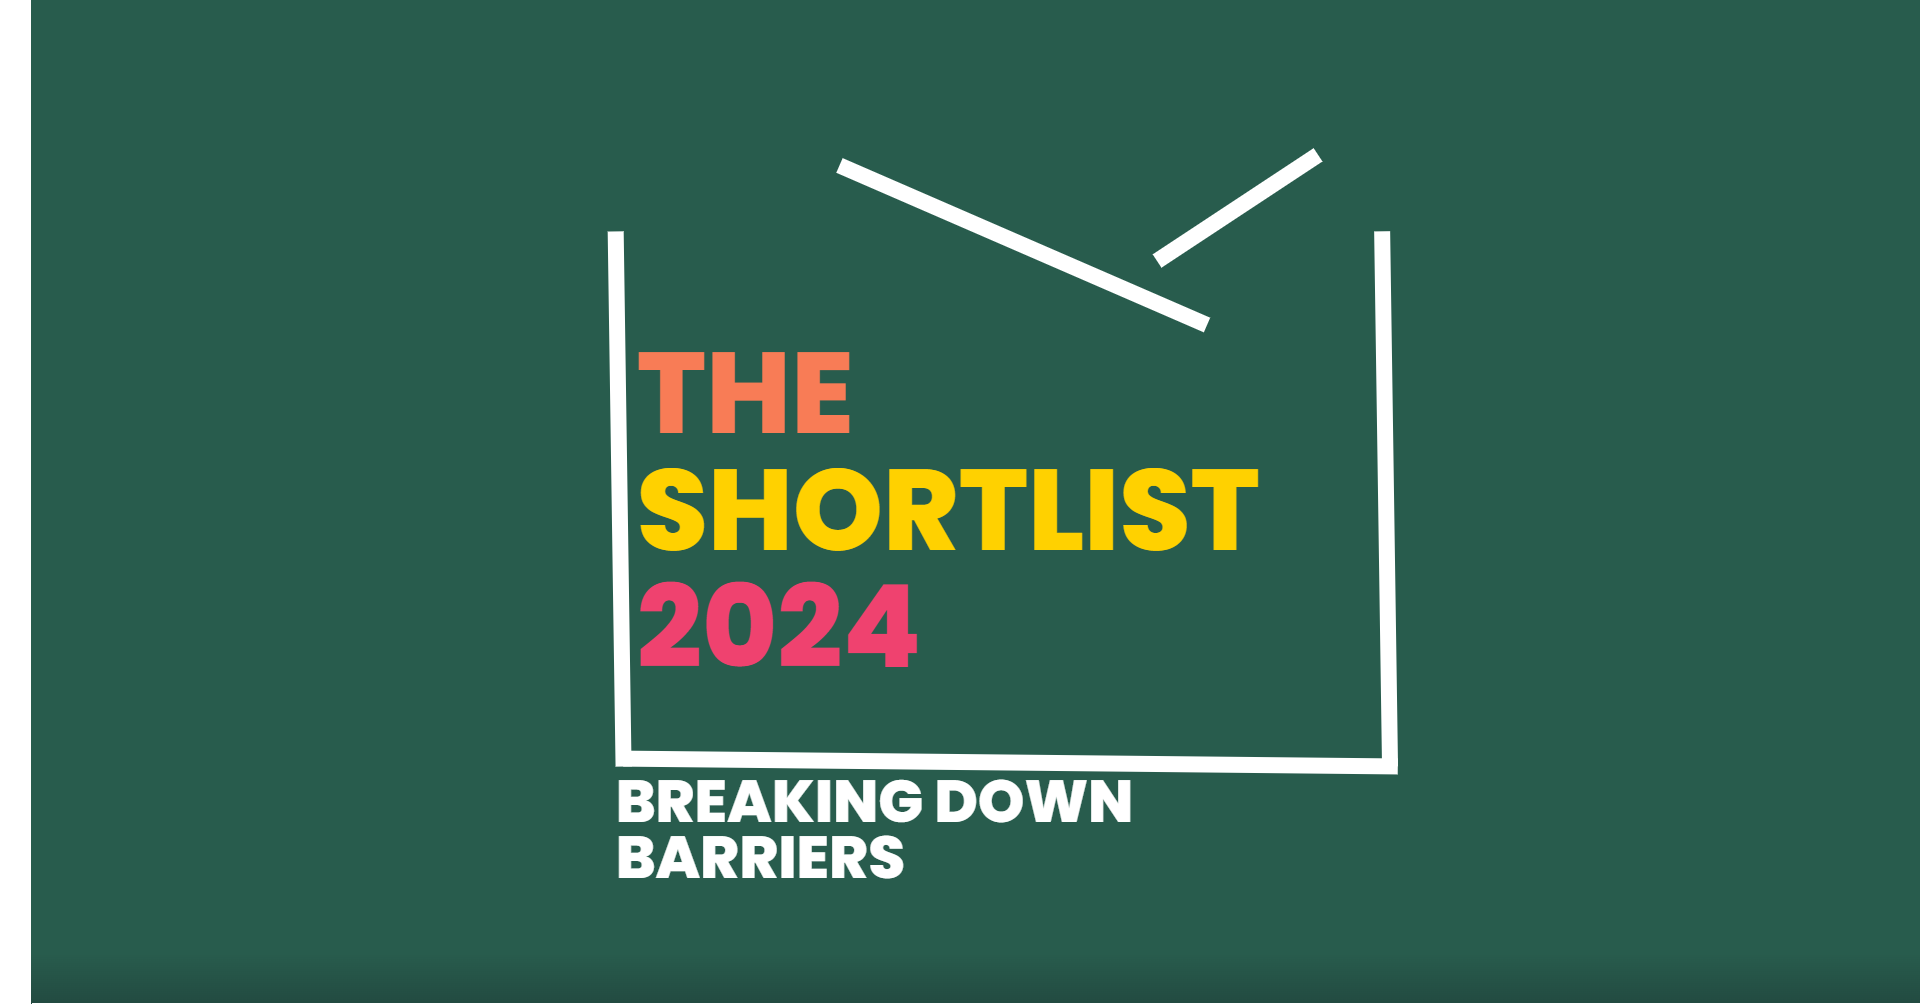 The Shortlist 2024 logo on green background